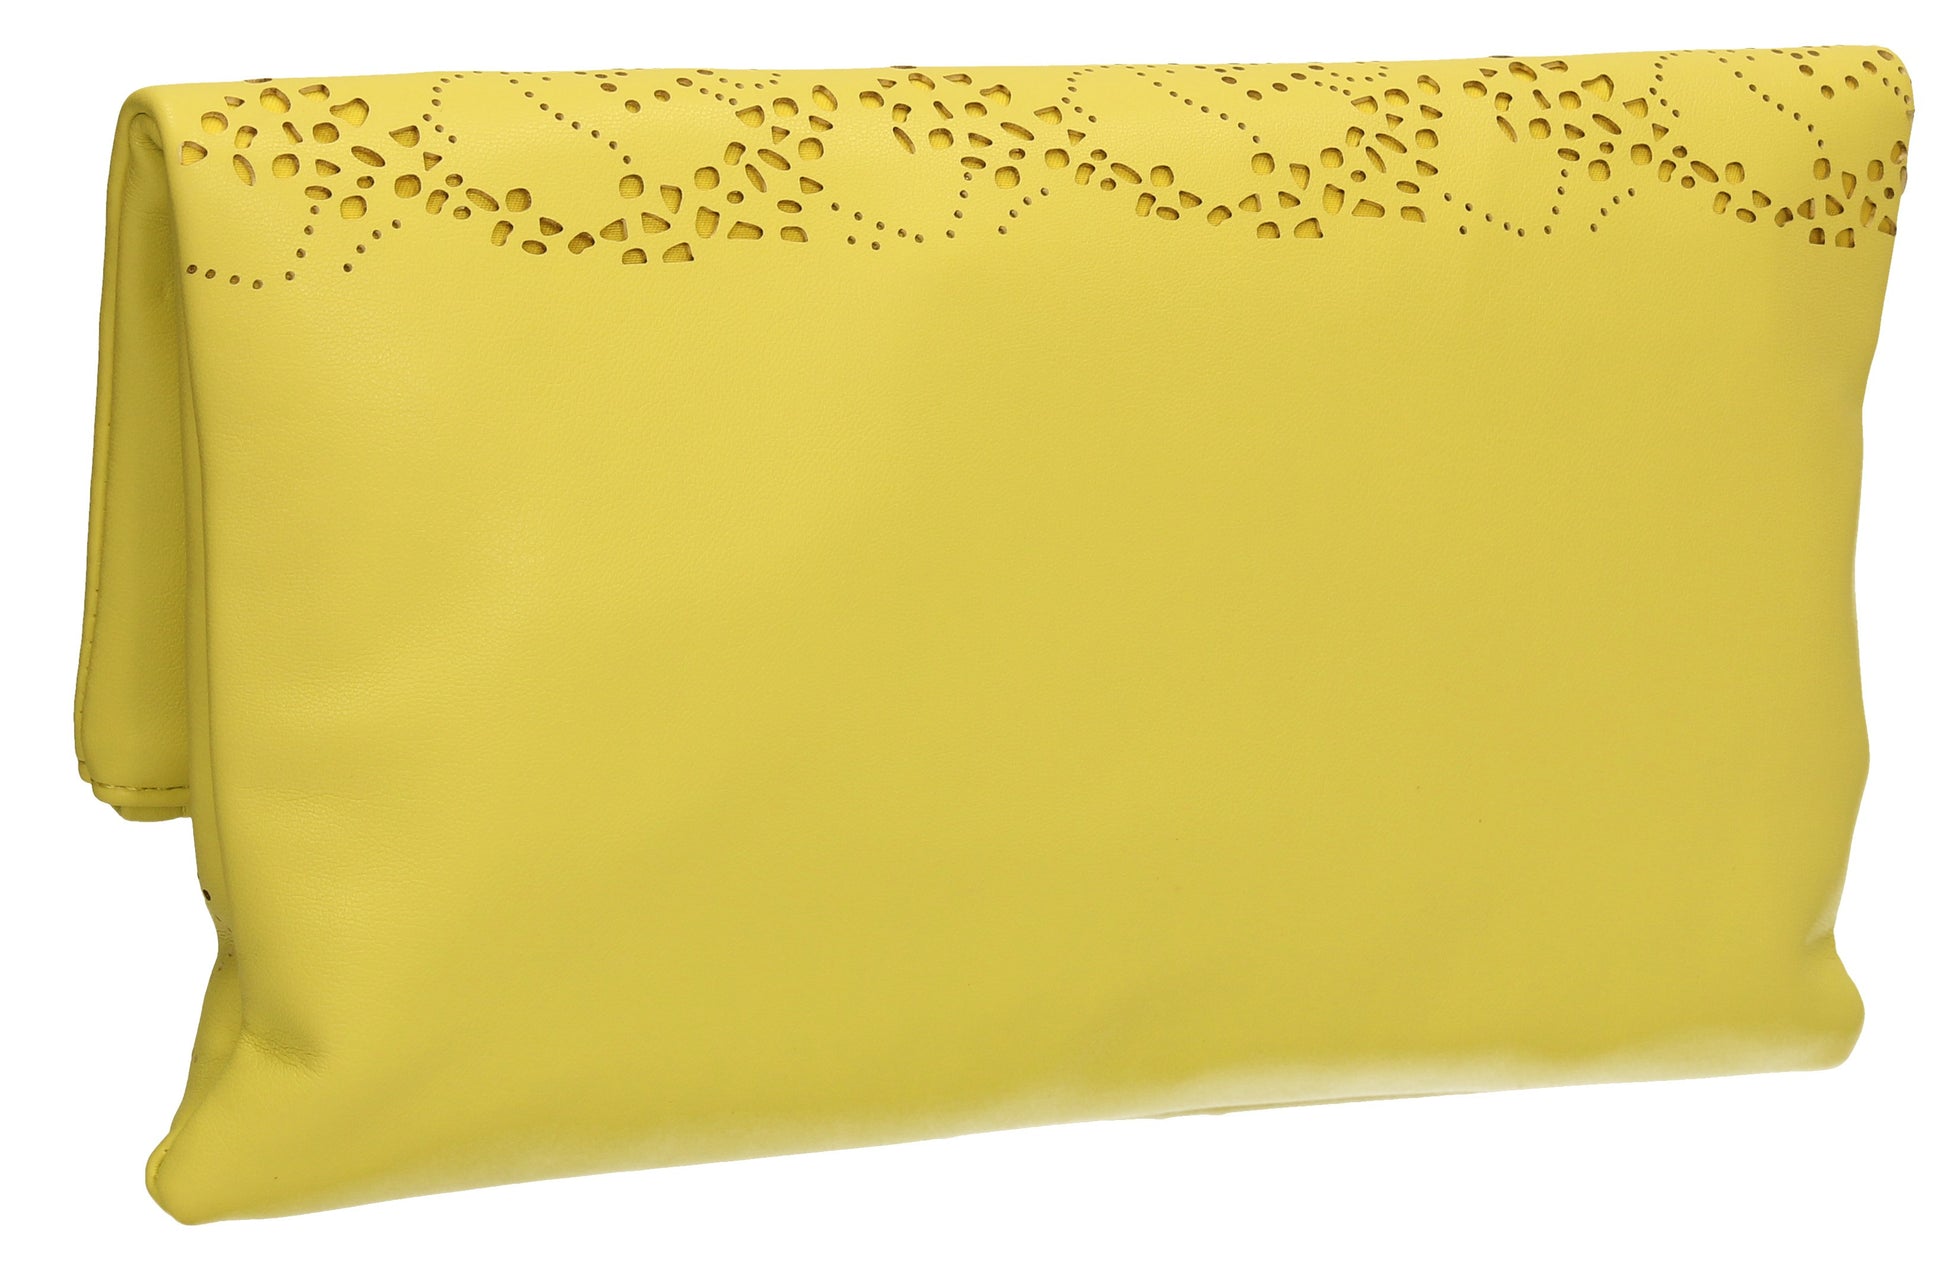 SWANKYSWANS Lena Clutch Bag Yellow Cute Cheap Clutch Bag For Weddings School and Work